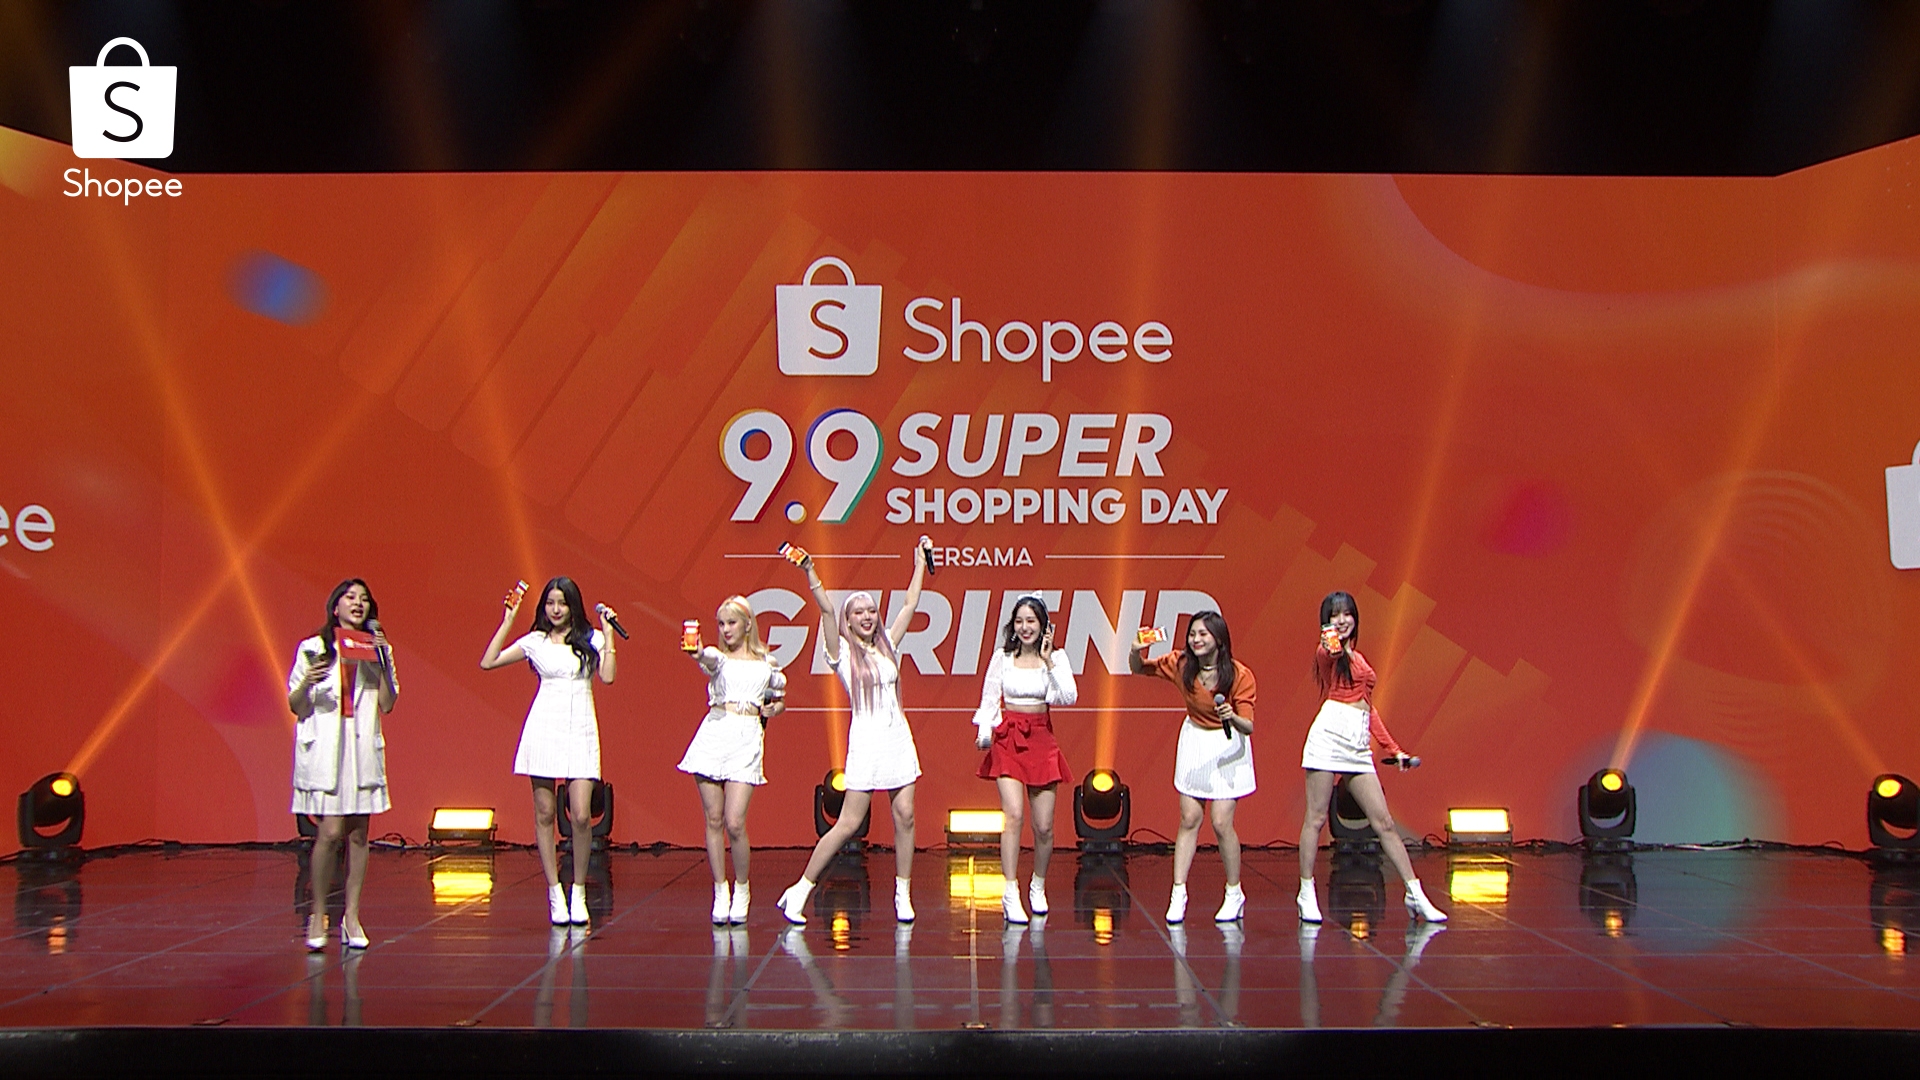 9.9 Super Shopping Day, Shopee Catatkan Penjualan 12 Juta Produk di 1 Jam Pertama